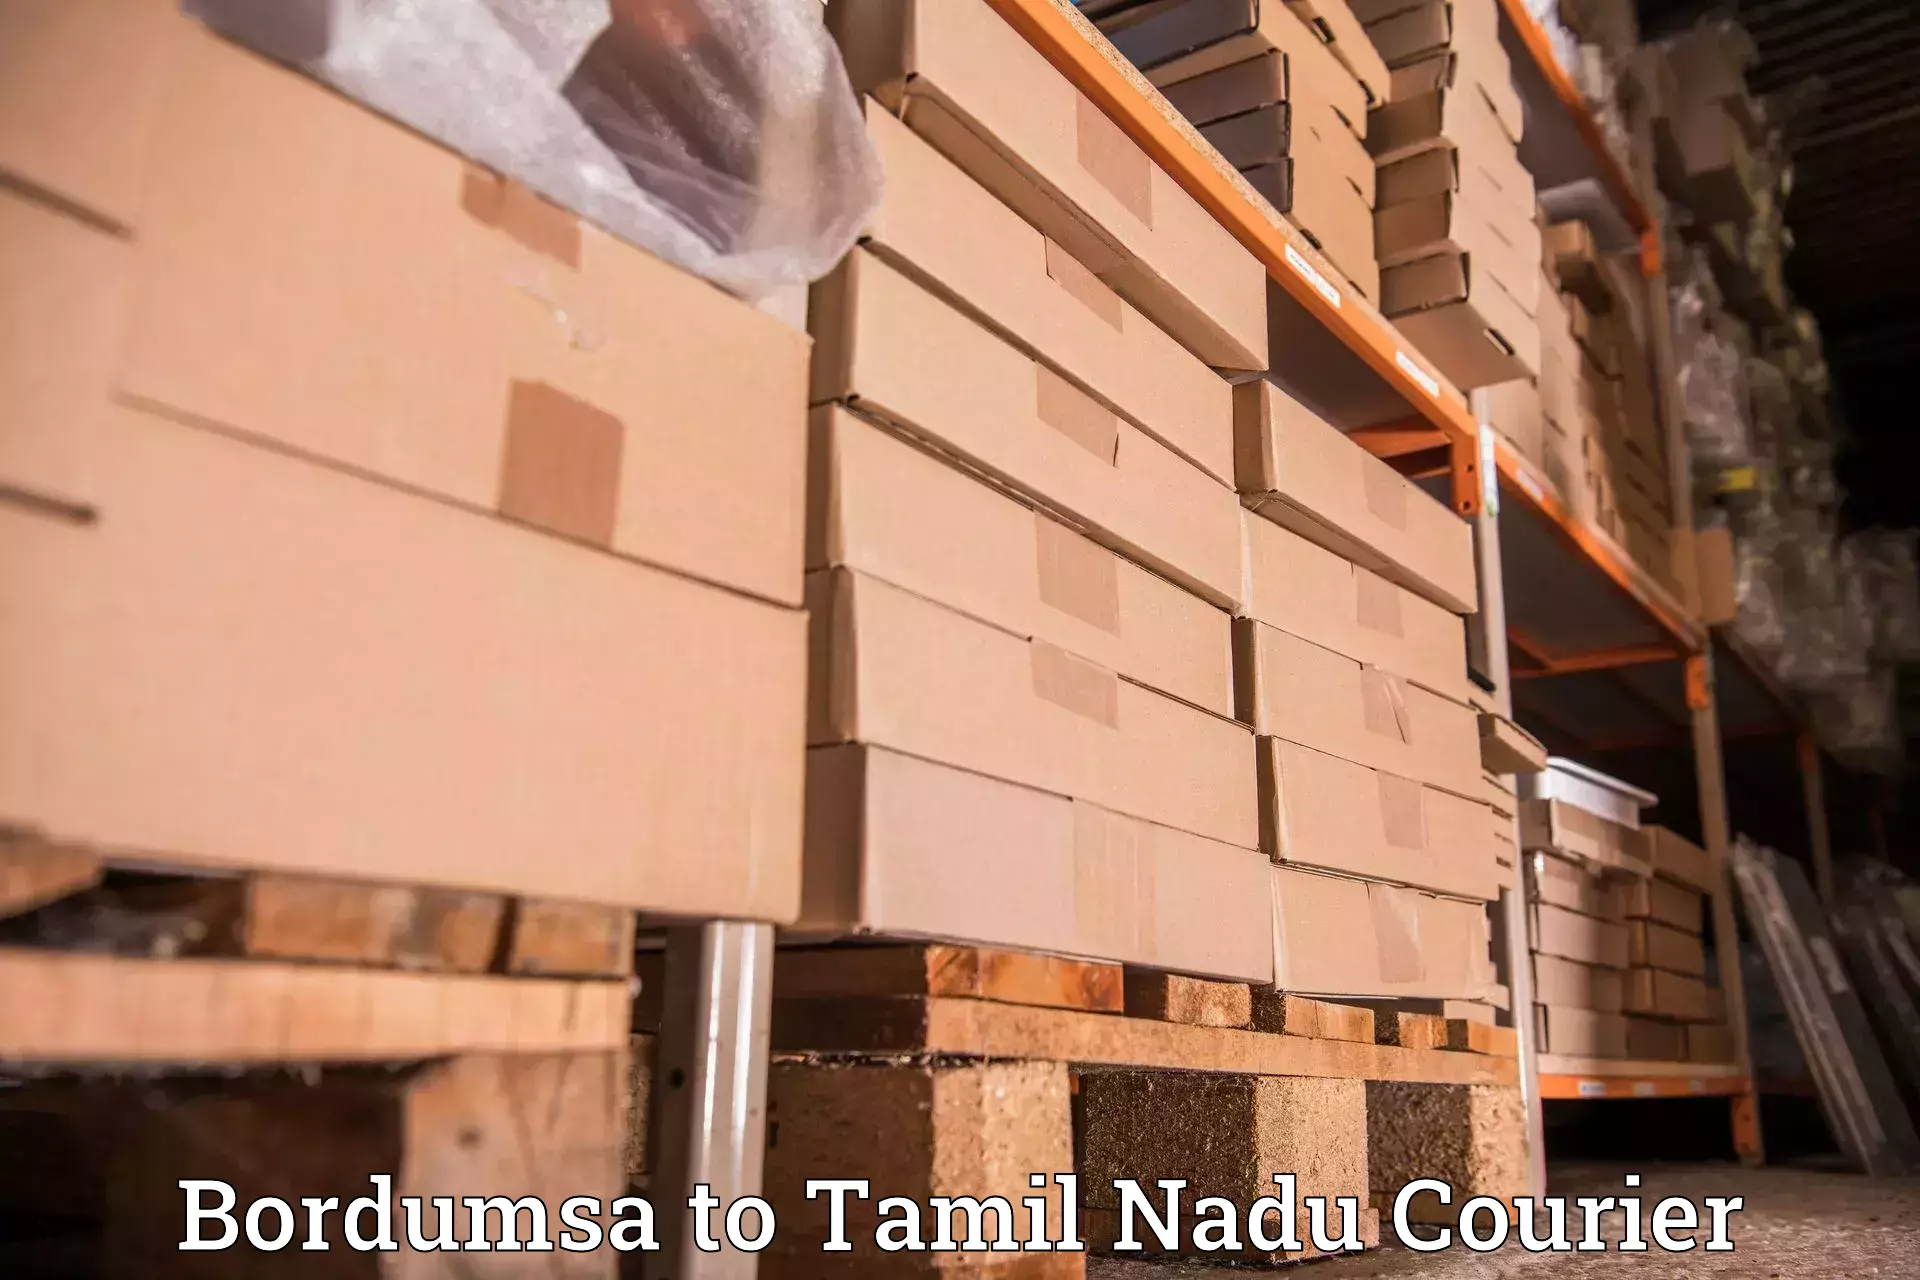 Courier service efficiency Bordumsa to Rathinasabapathy Puram